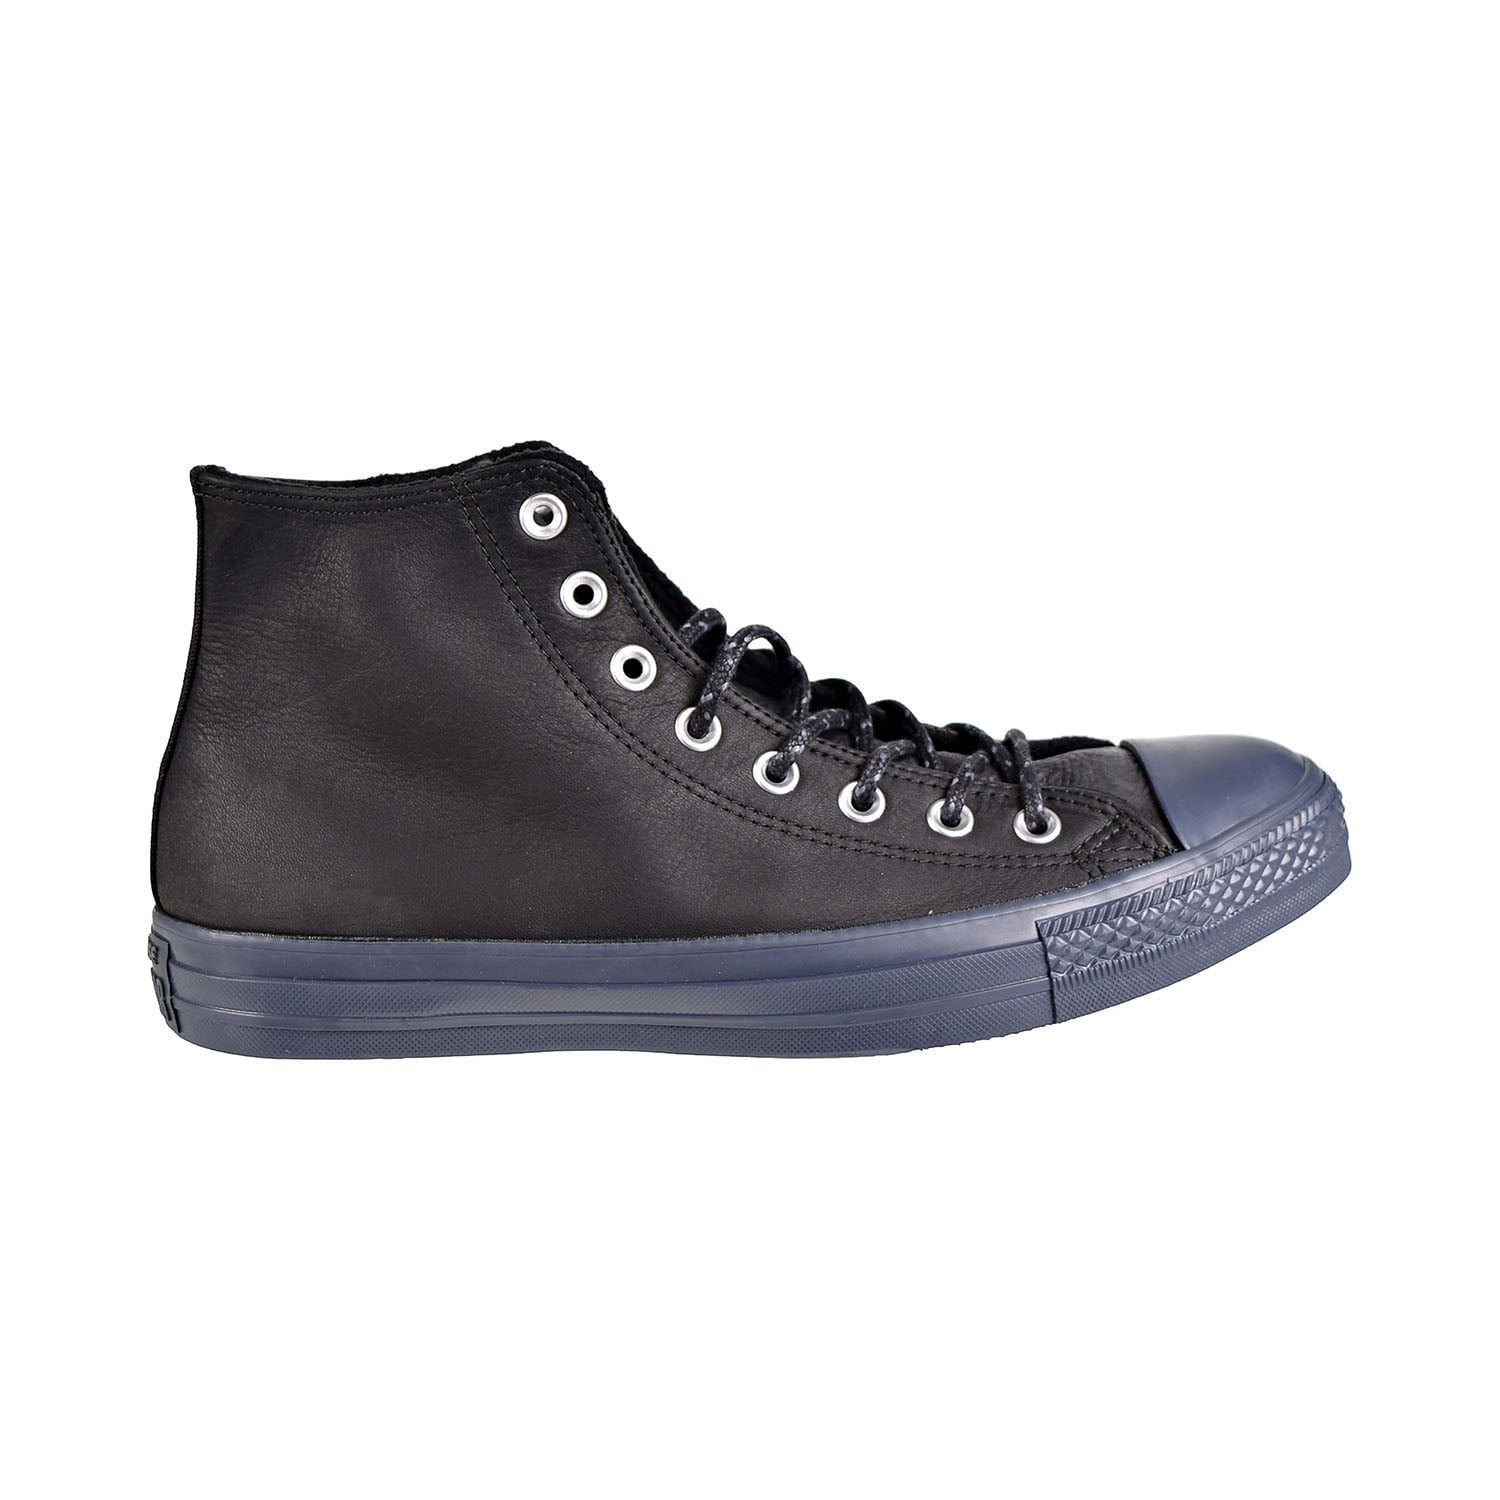 Jarra hemisferio Residuos Converse Chuck Taylor All Star Hi Thermal Men's Shoes Black-Sharkskin  157514c - Walmart.com